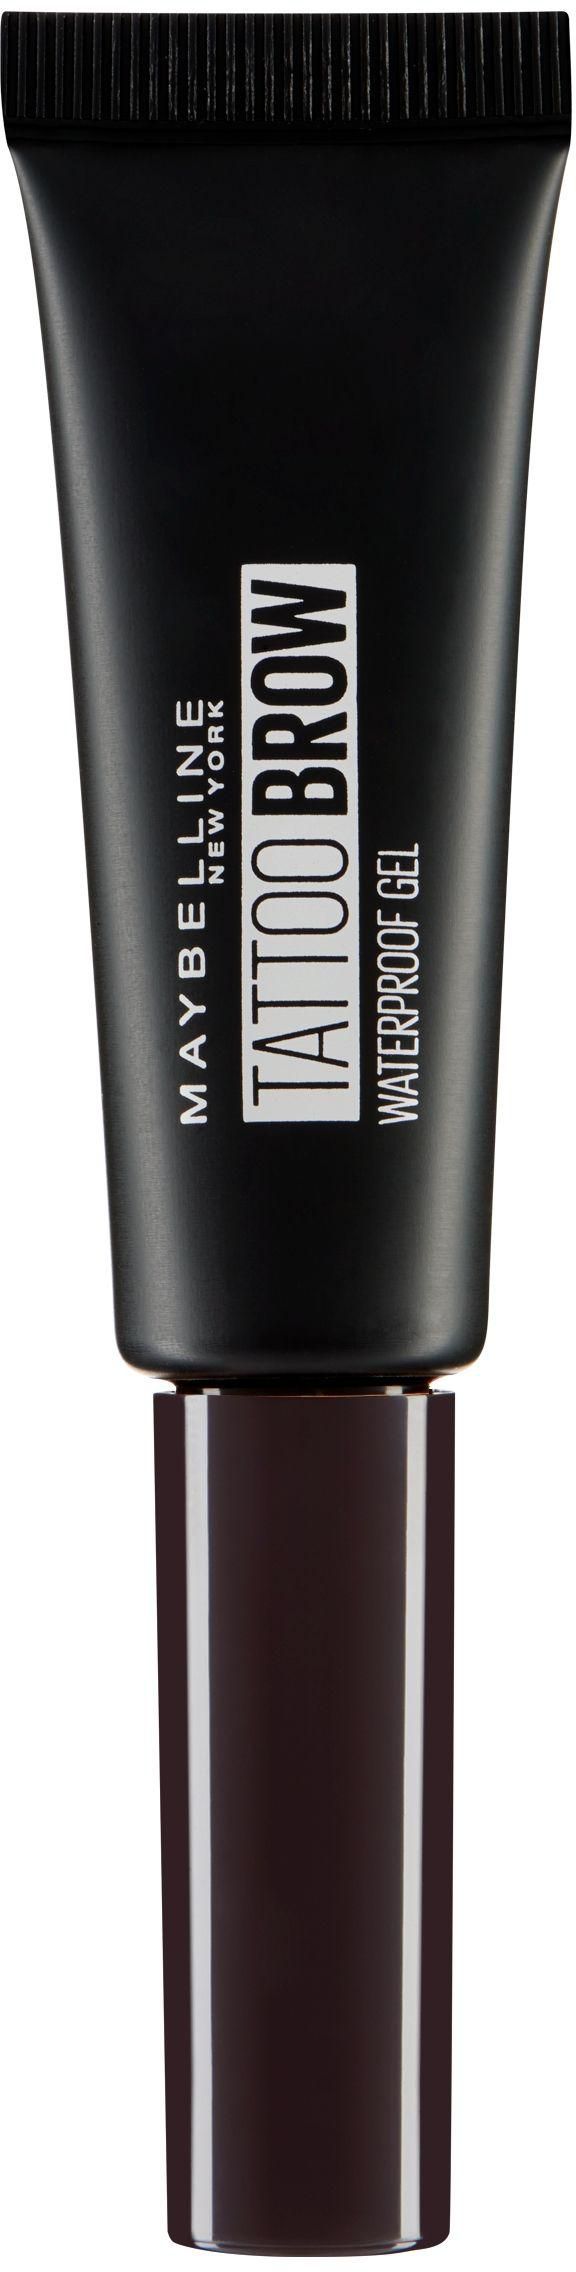 Maybelline New York, New York, Tattoo Brow Waterproof Black 08 - 1 Kit